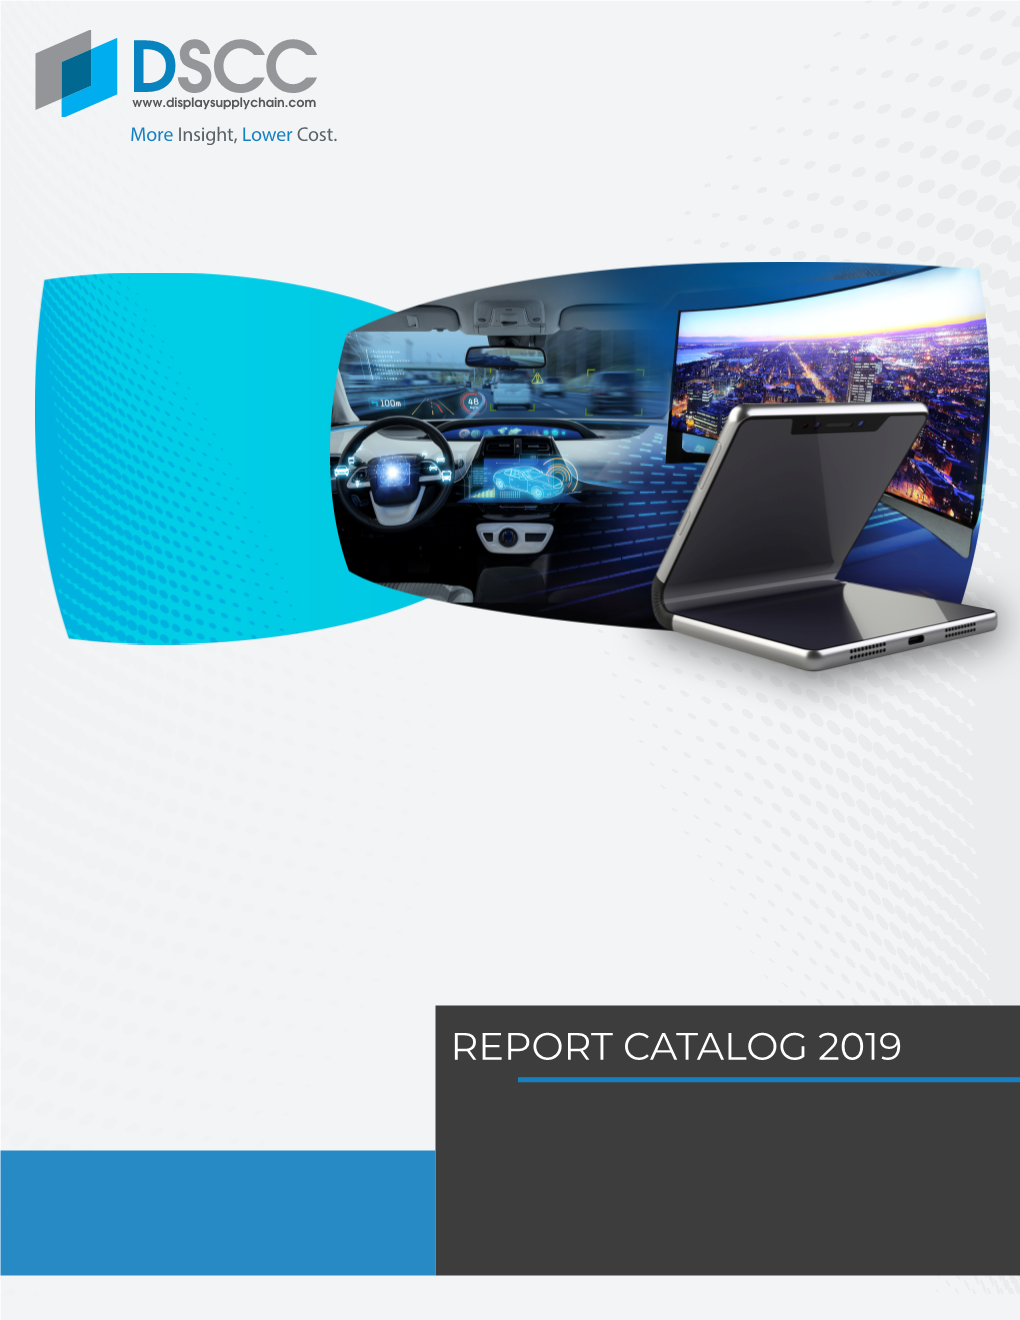 Complete-Report-Catalog-2019.Pdf